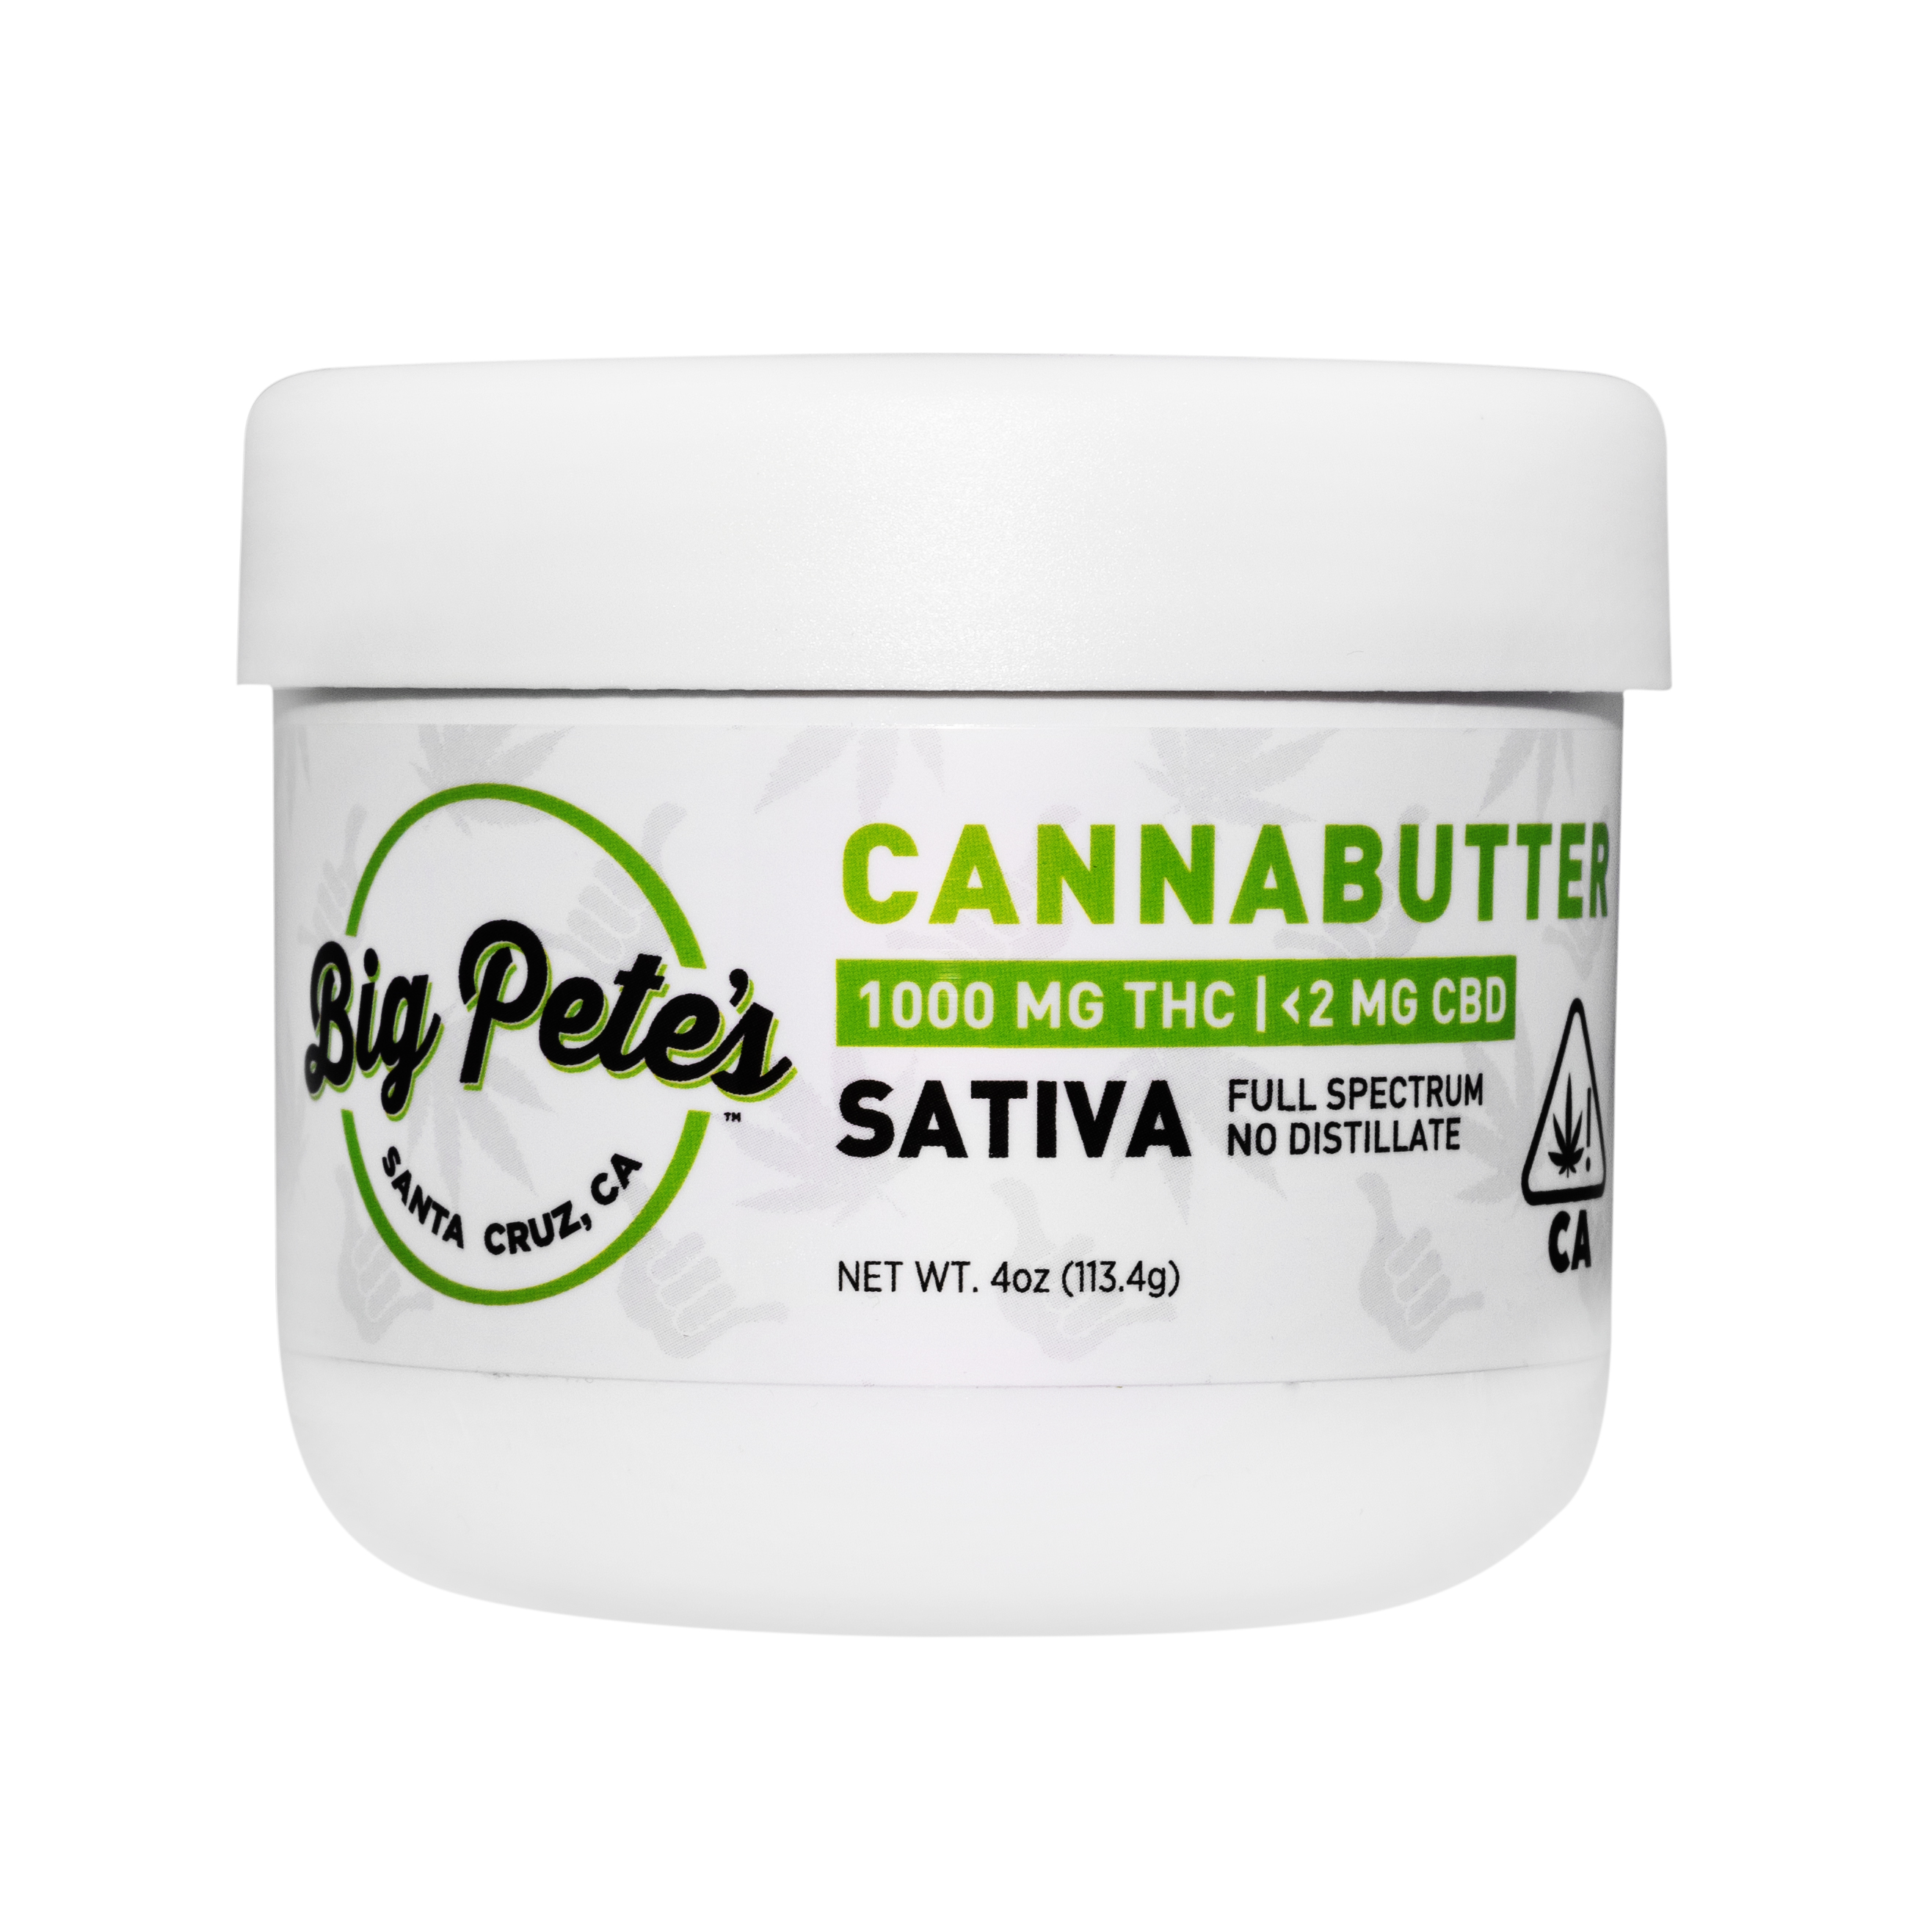 A photograph of Big Pete's Cannabutter Sativa Jar 1,000mg THC